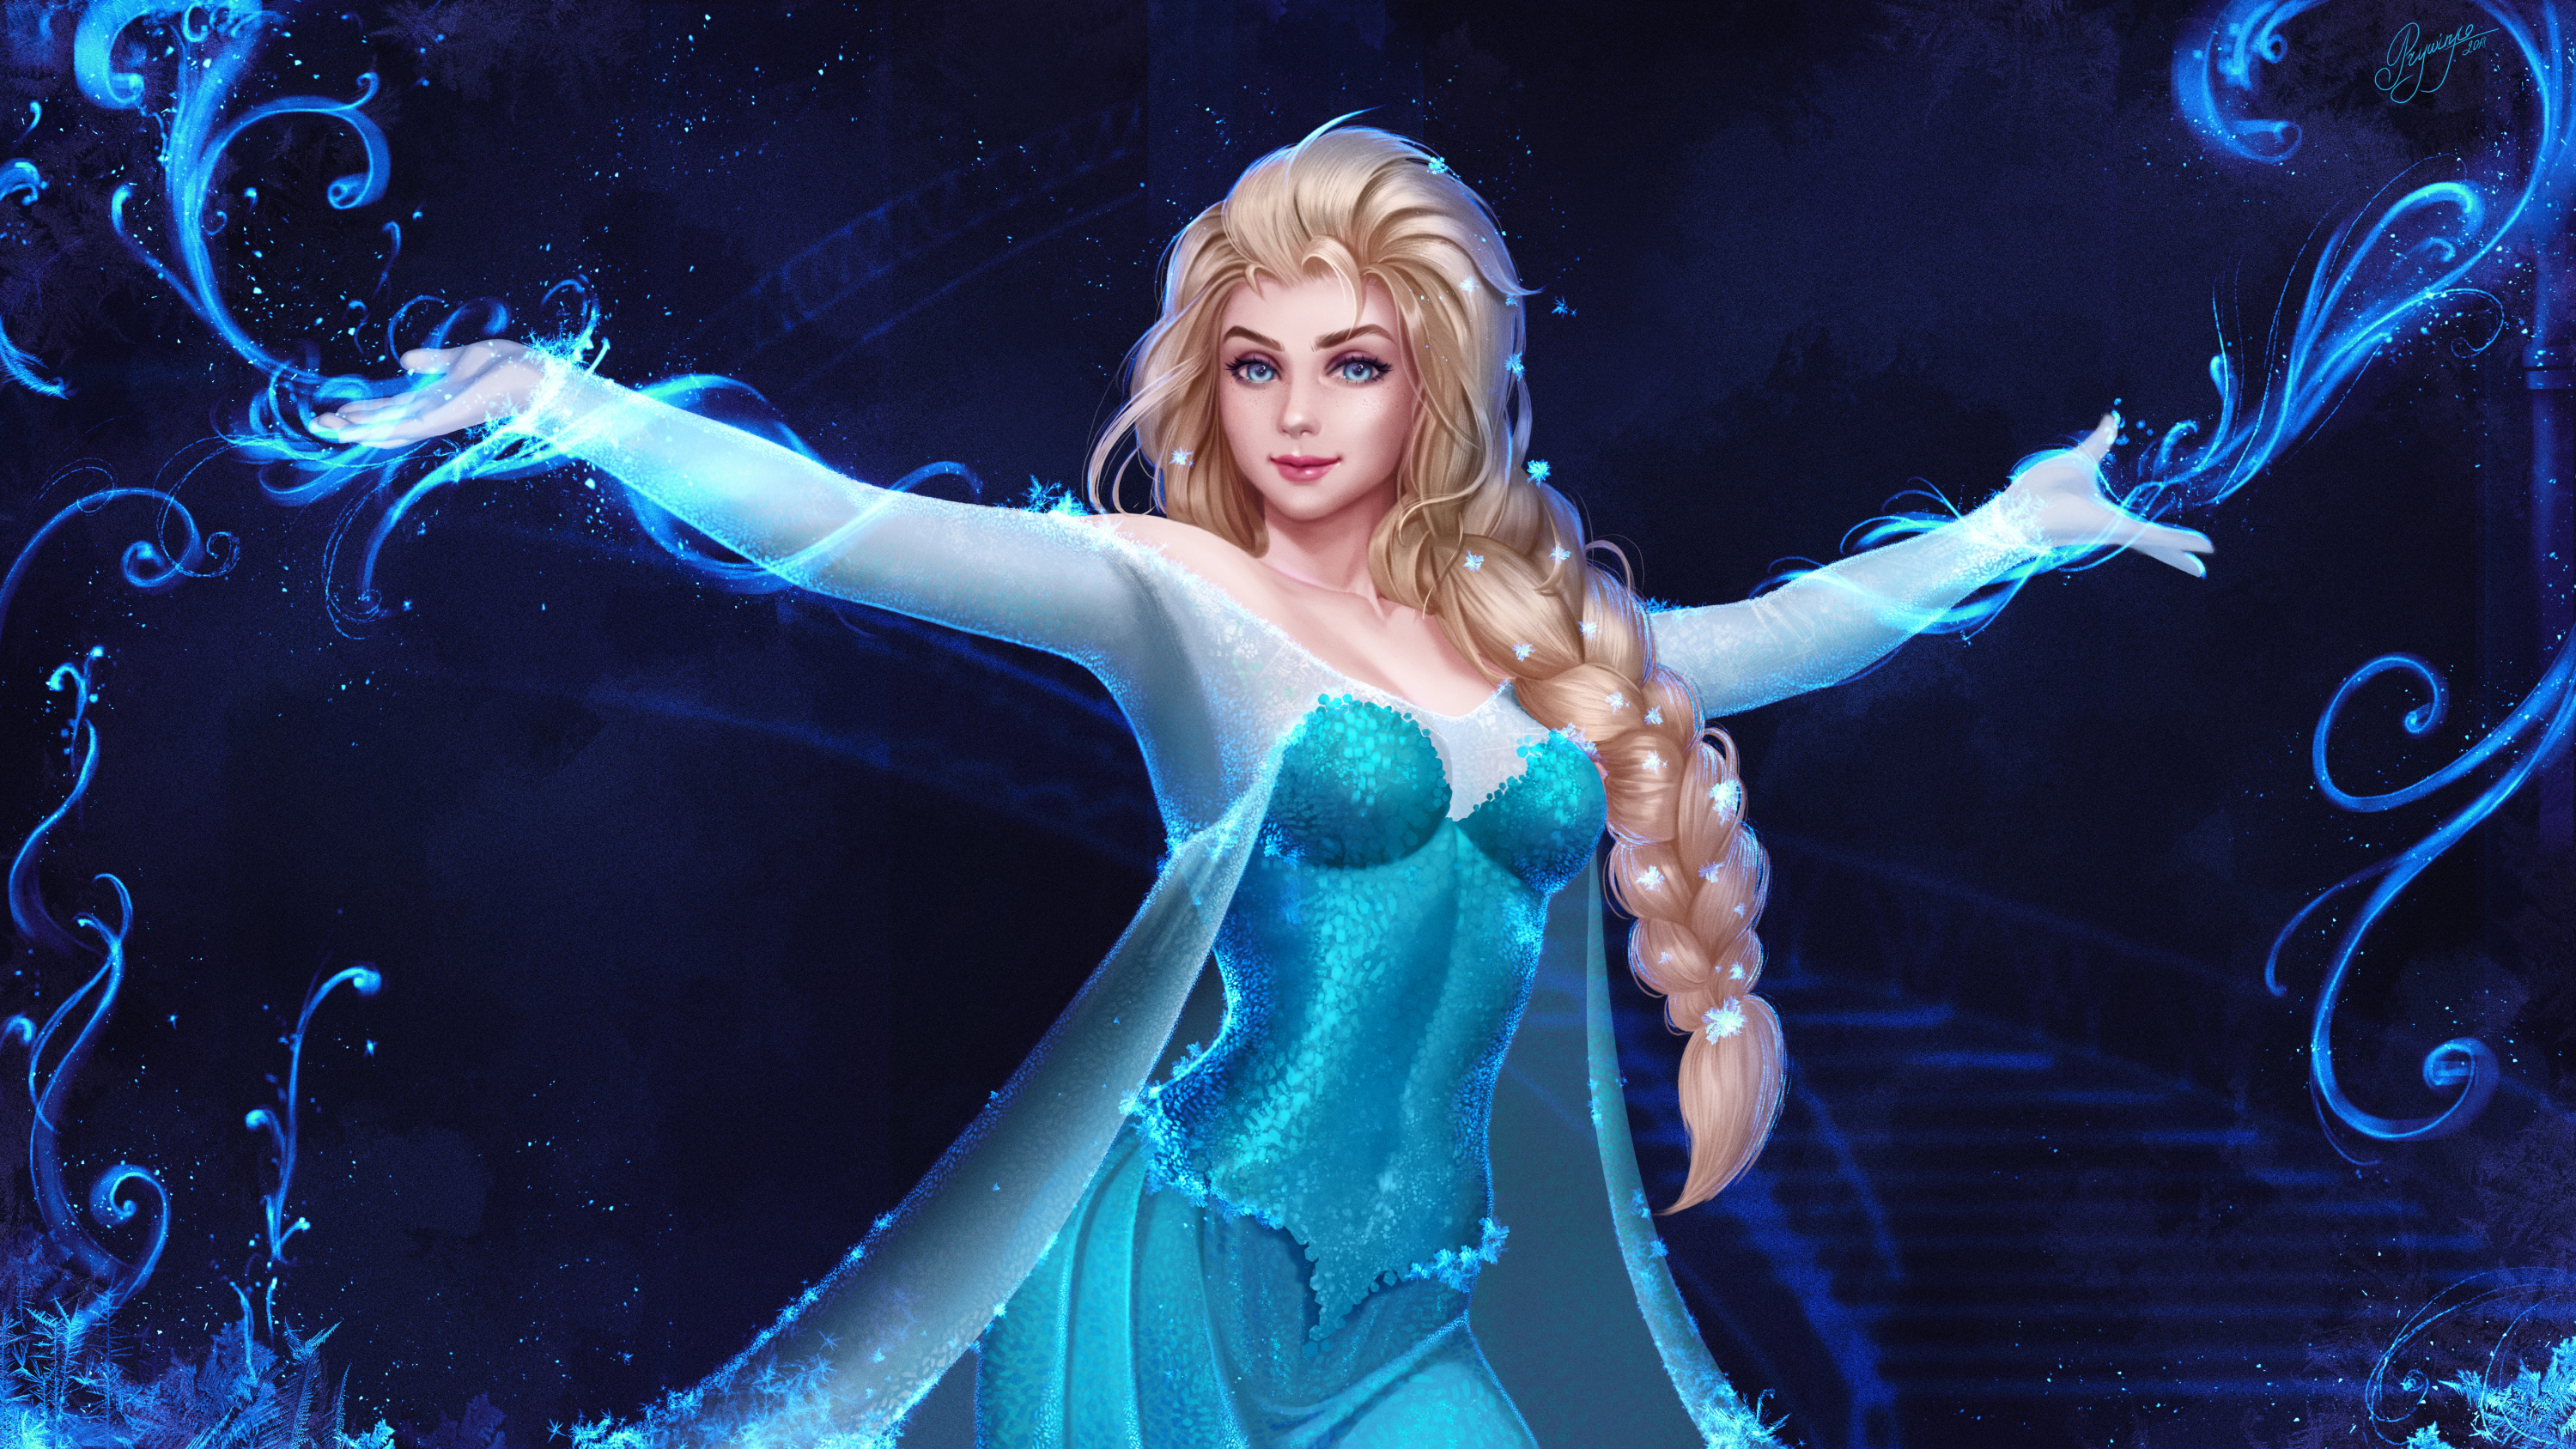 Elsa Frozen Movie Disney Princesses Blonde Braided Hair Blue Eyes Looking At Viewer Smiling Dress Ar 3000x1688